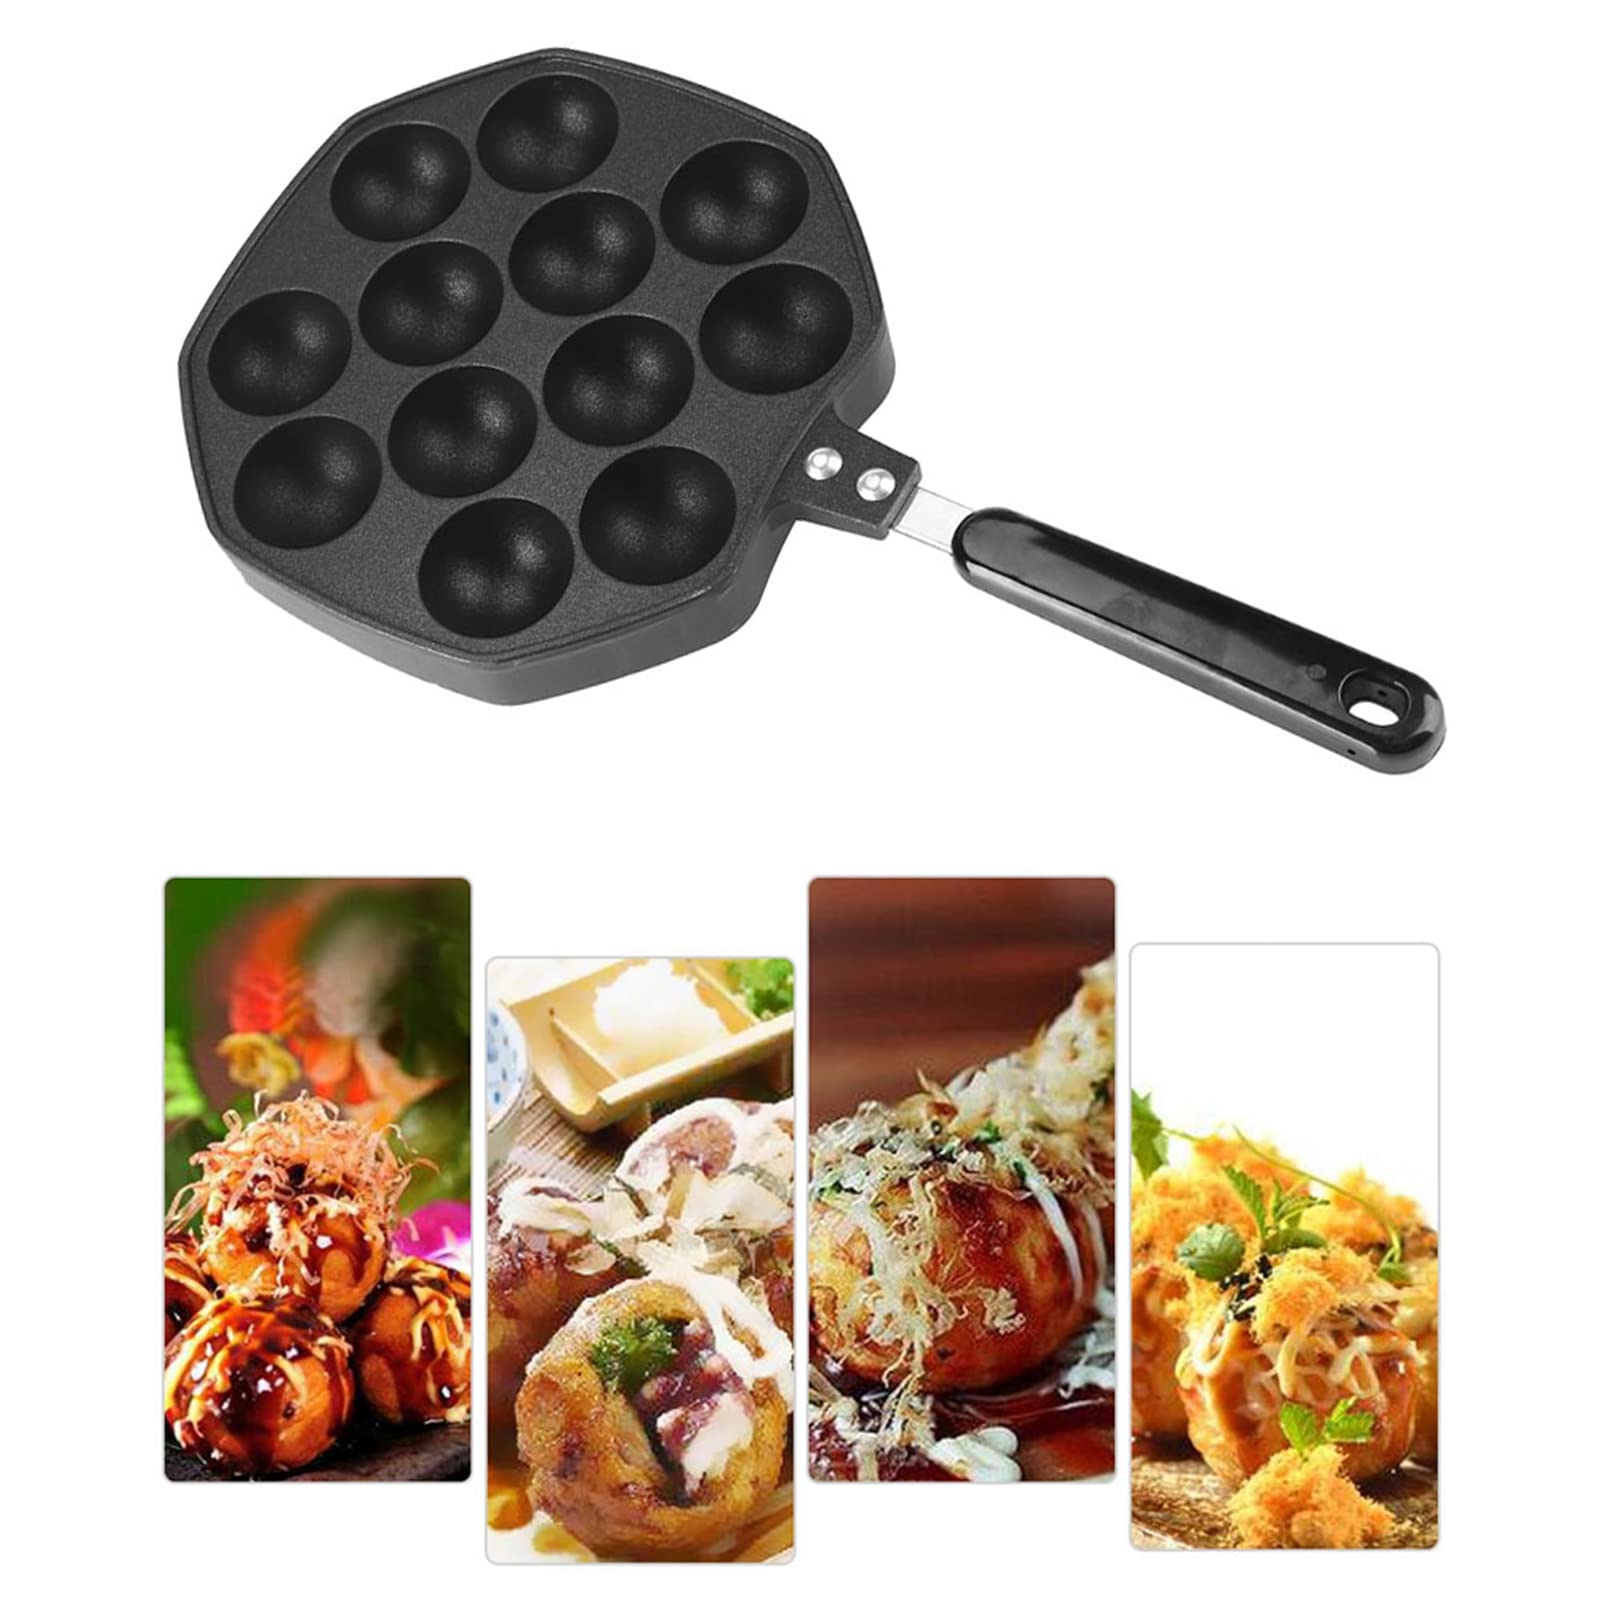 Fdit Black 12 Cavities Aluminum Non-stick Takoyaki Grill Pan Plate Octopus Meatballs Baking for Home Kithen, Dining Room